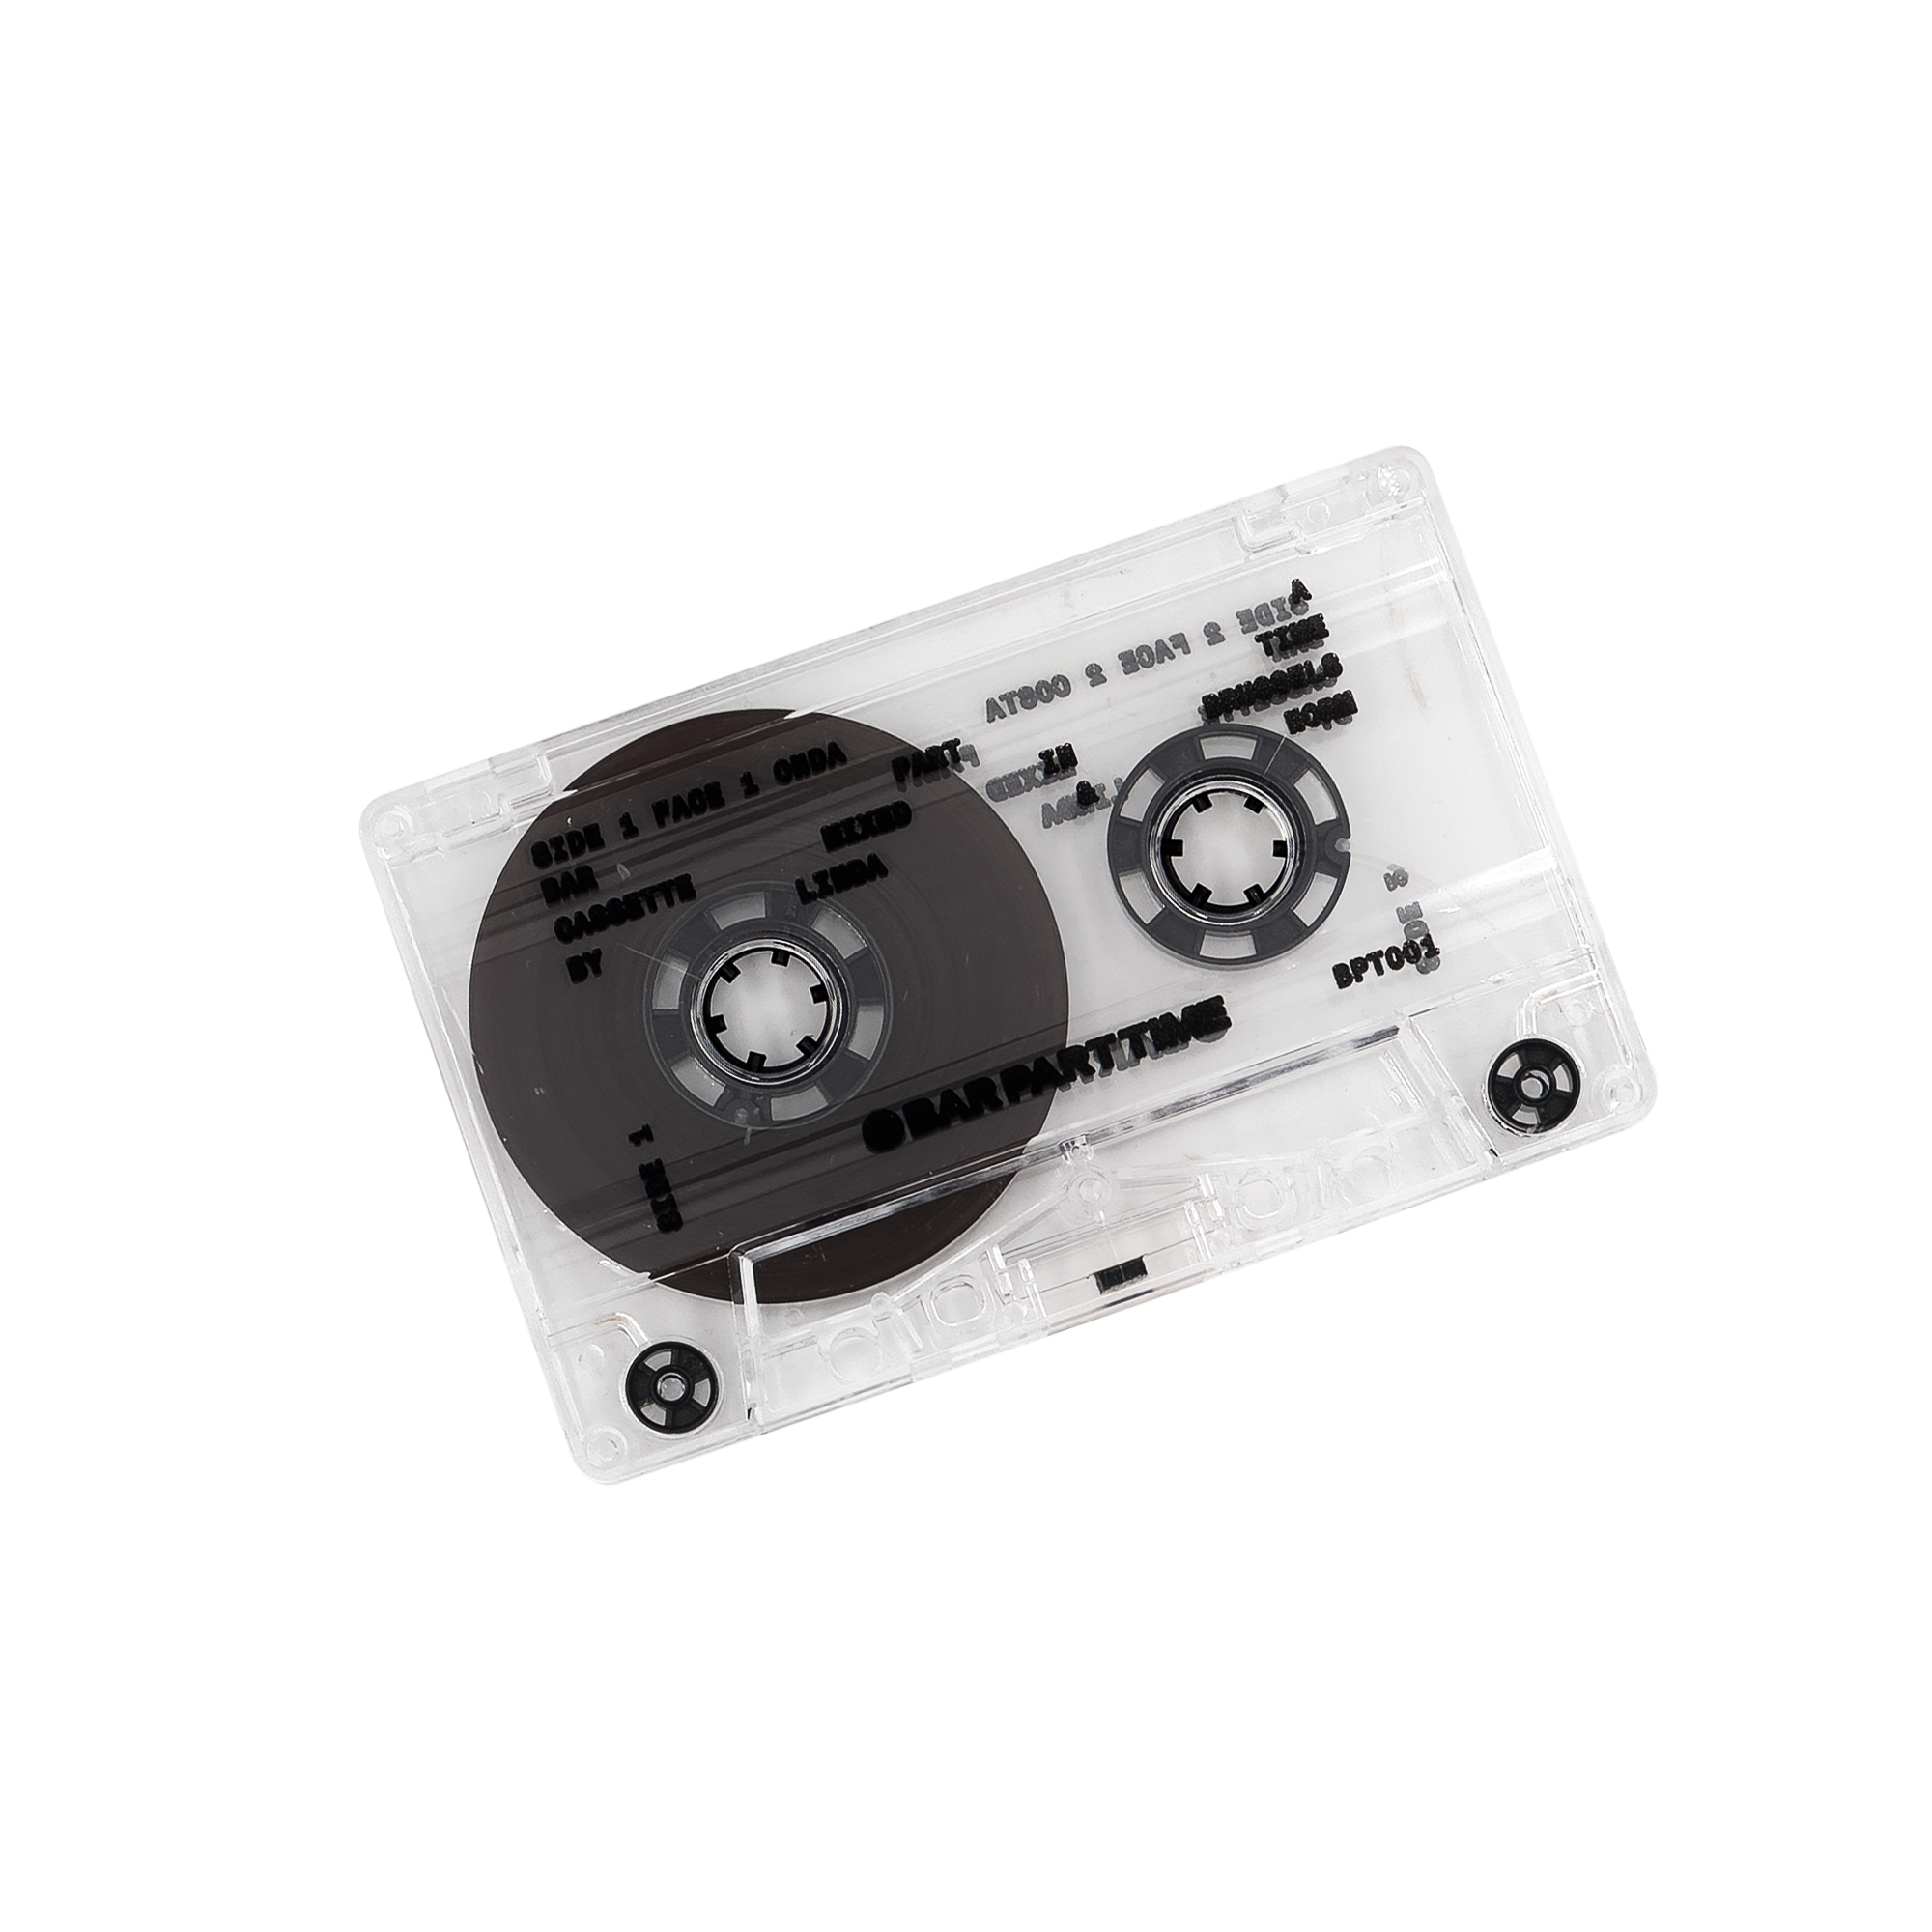 Linda & Norm - “Matamoros” BPT001 Cassette